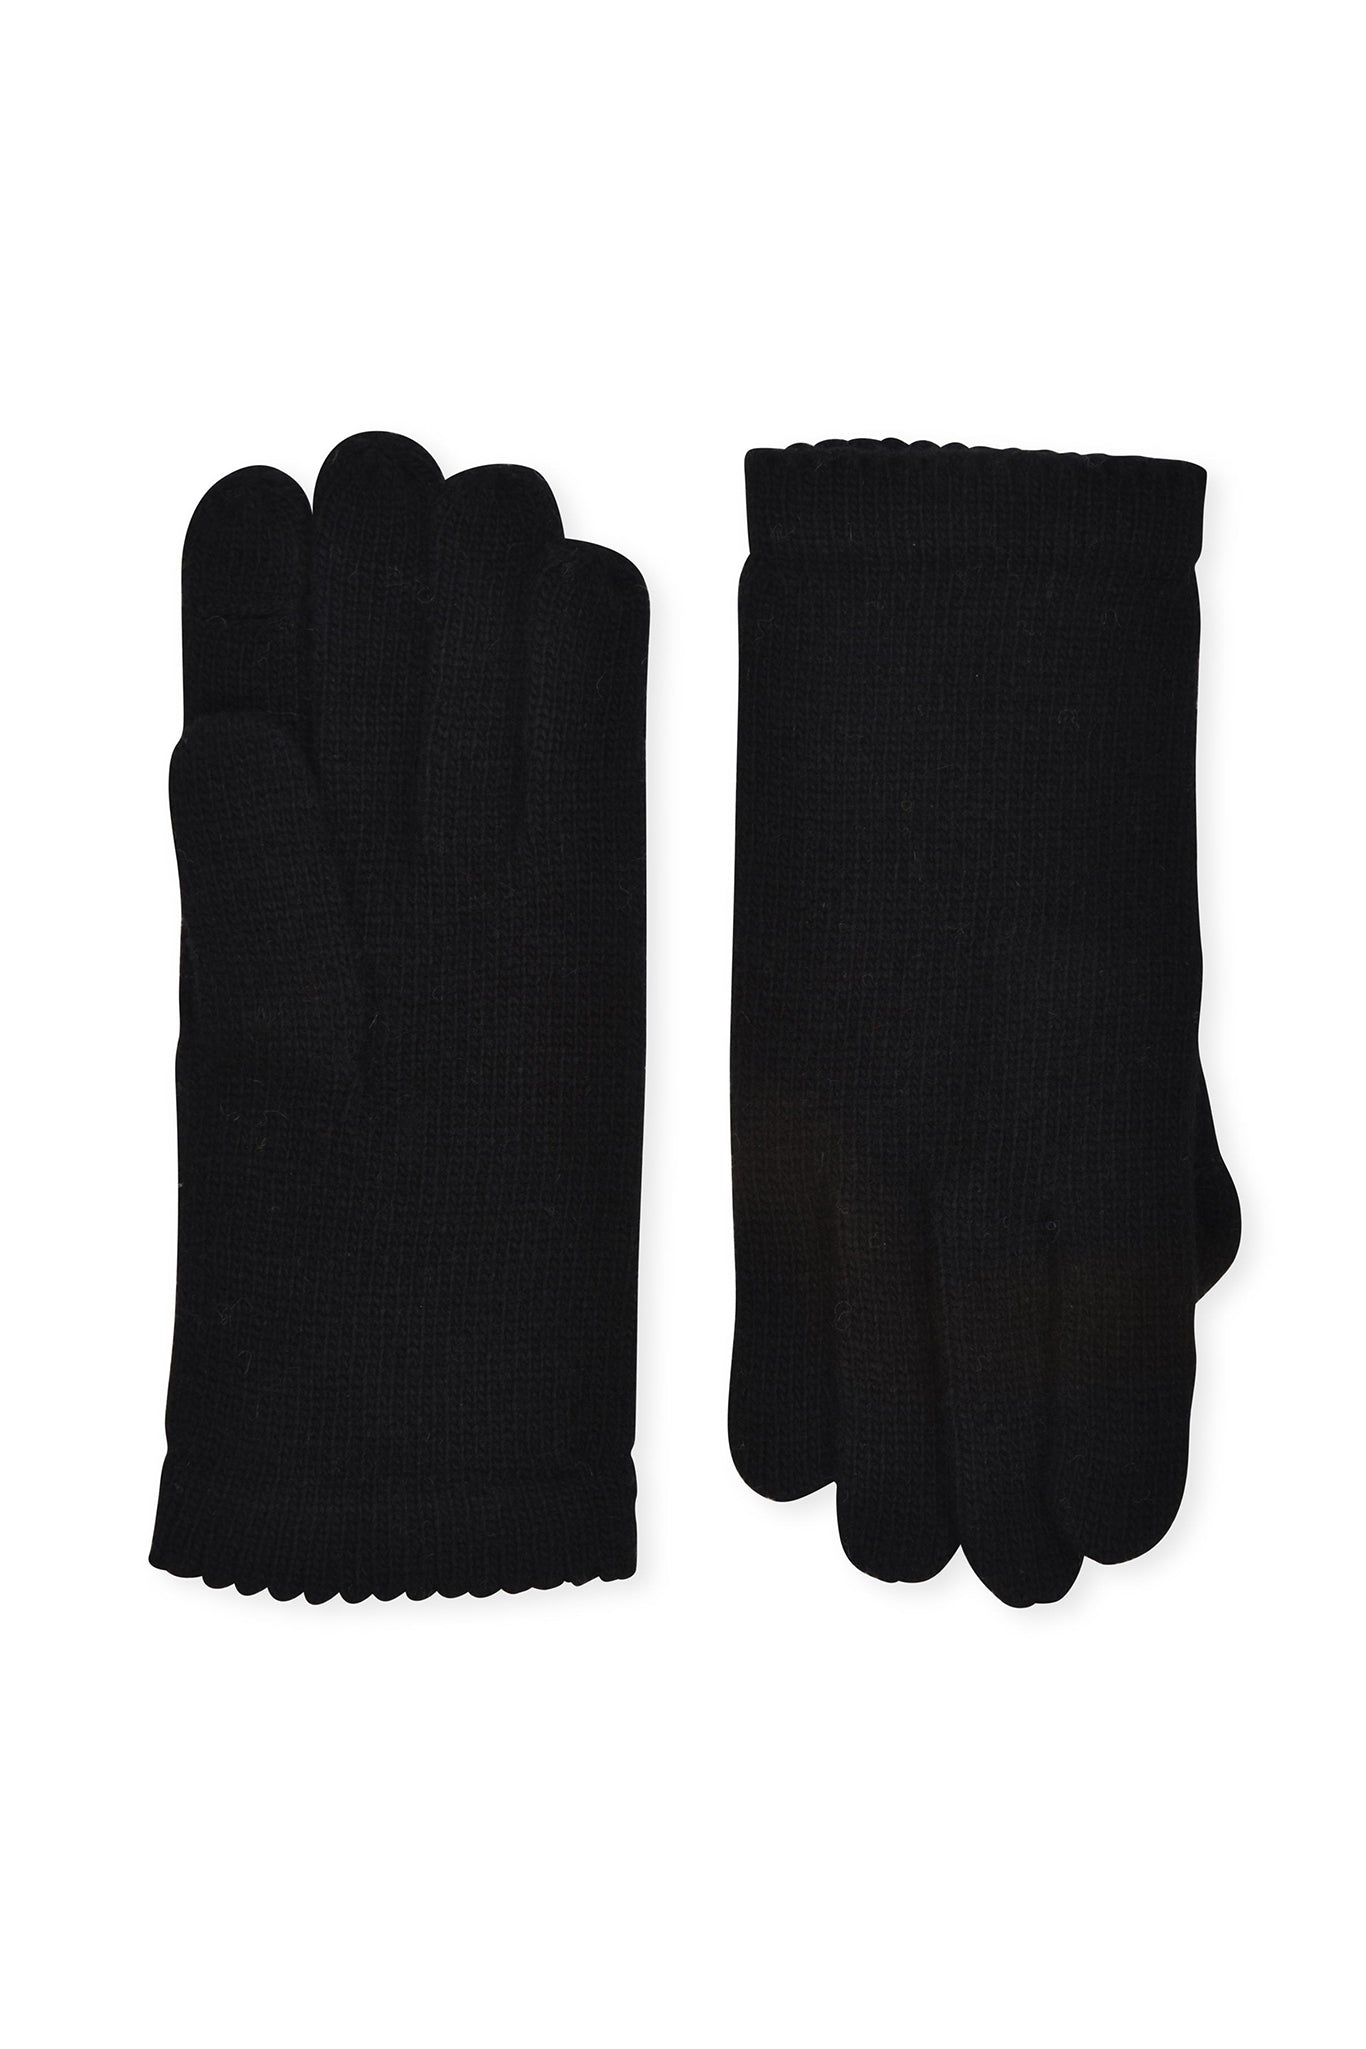 Amato Classic Knit Glove - Black